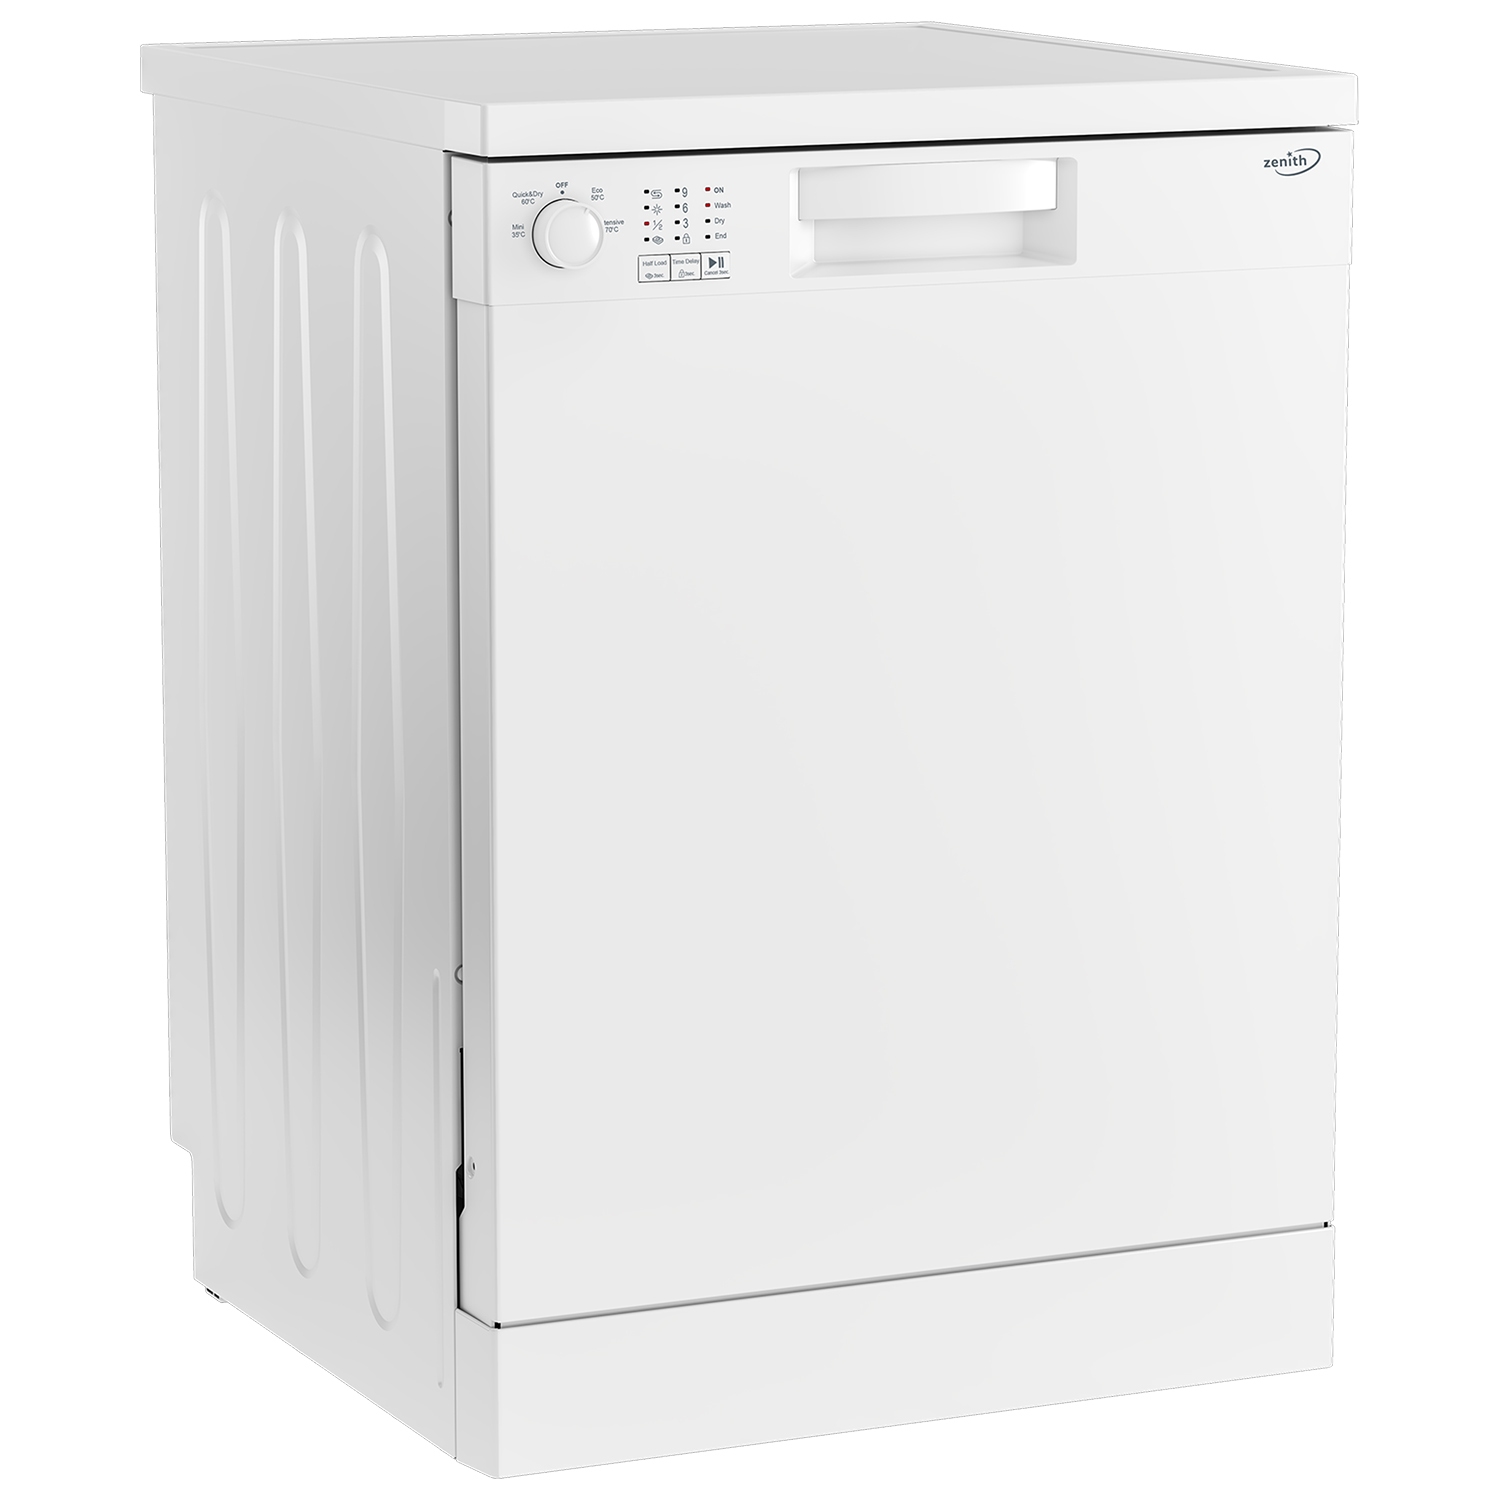 Zenith ZDW600W Full Size Dishwasher - White - 13 Place Settings - 2